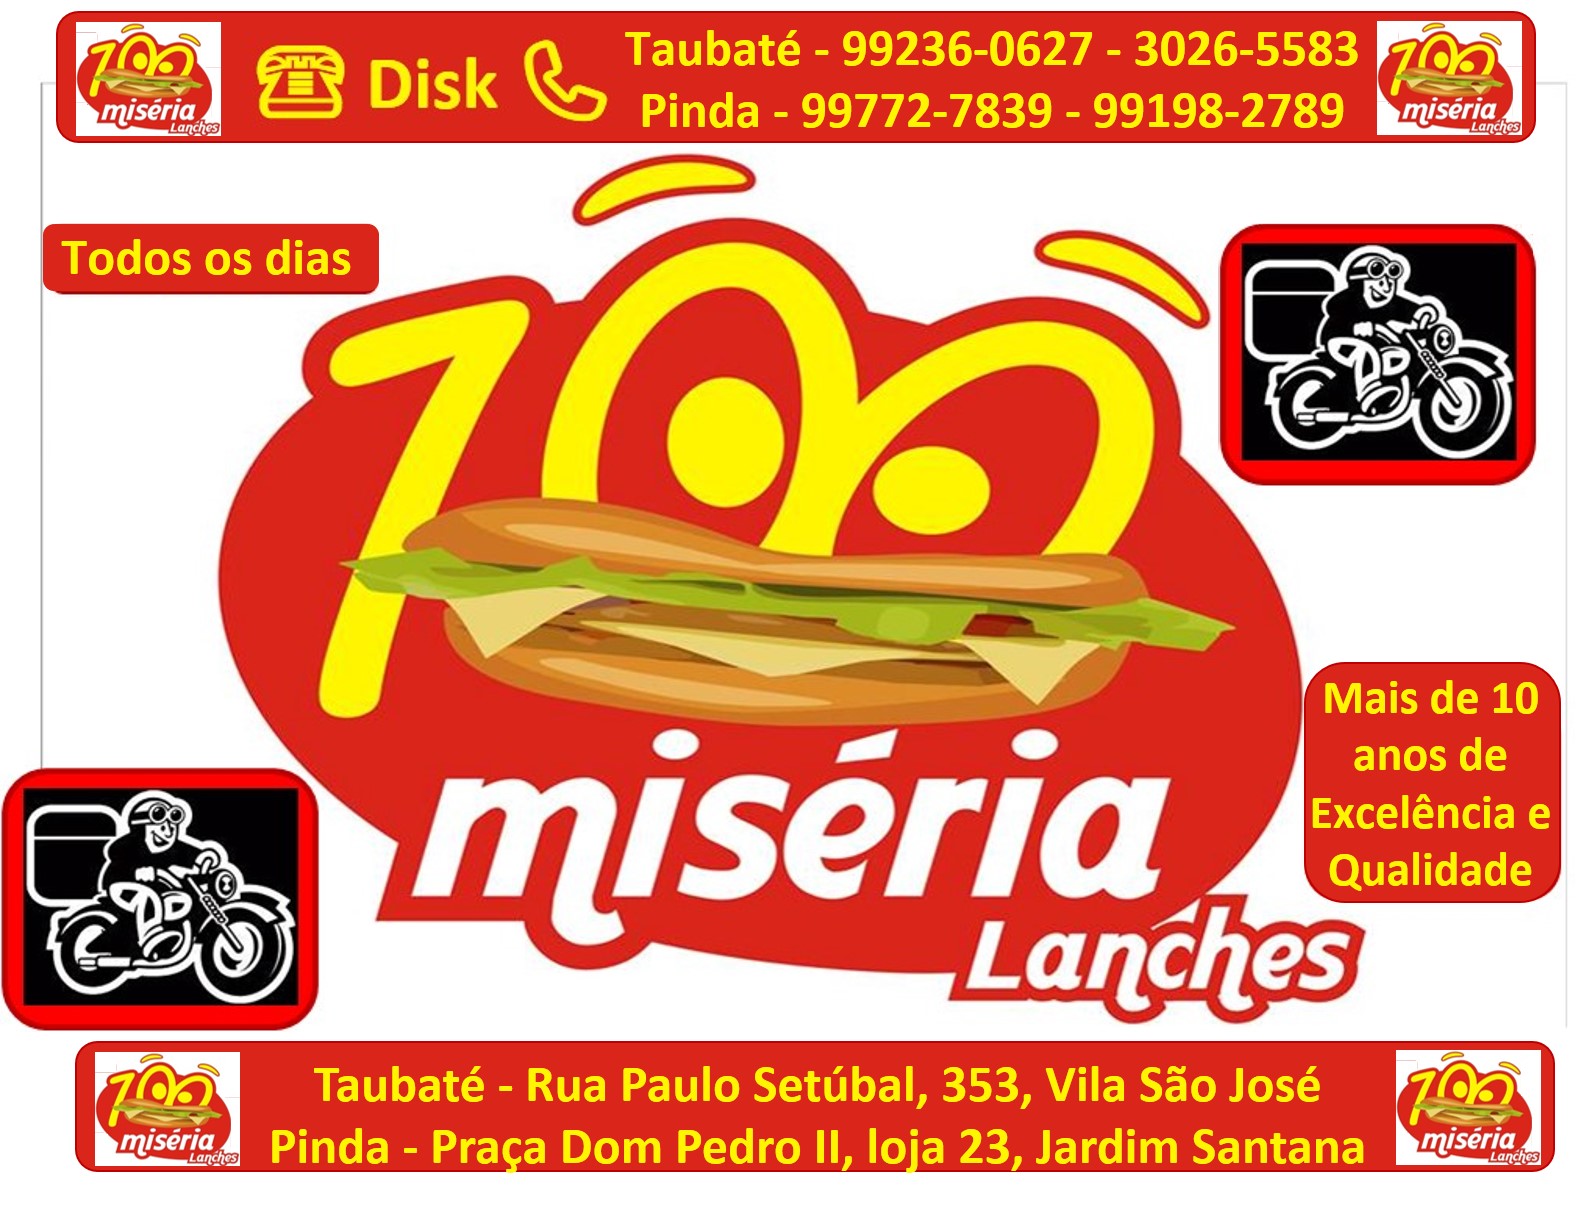 100 Miséria Lanches, Rua Paulo Setubal, 353, Vila São José, Taubaté-SP - Disk Lanches 12 3026-5583 99127-2918 98820-3209 98160-8499